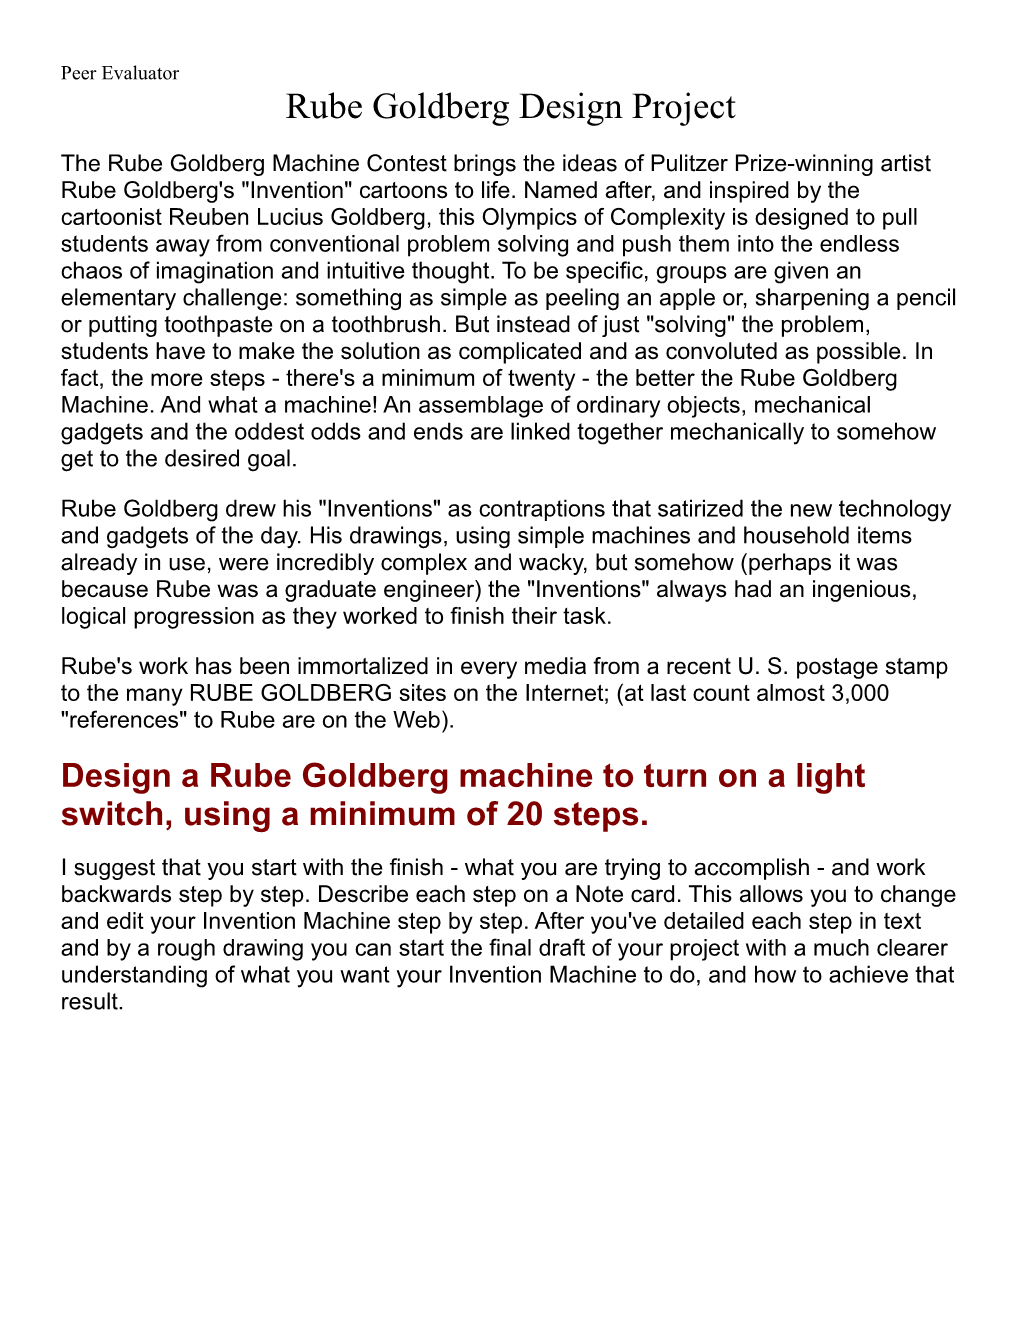 The Rube Goldberg Machine Contest Brings the Ideas of Pulitzer Prize-Winning Artist Rube